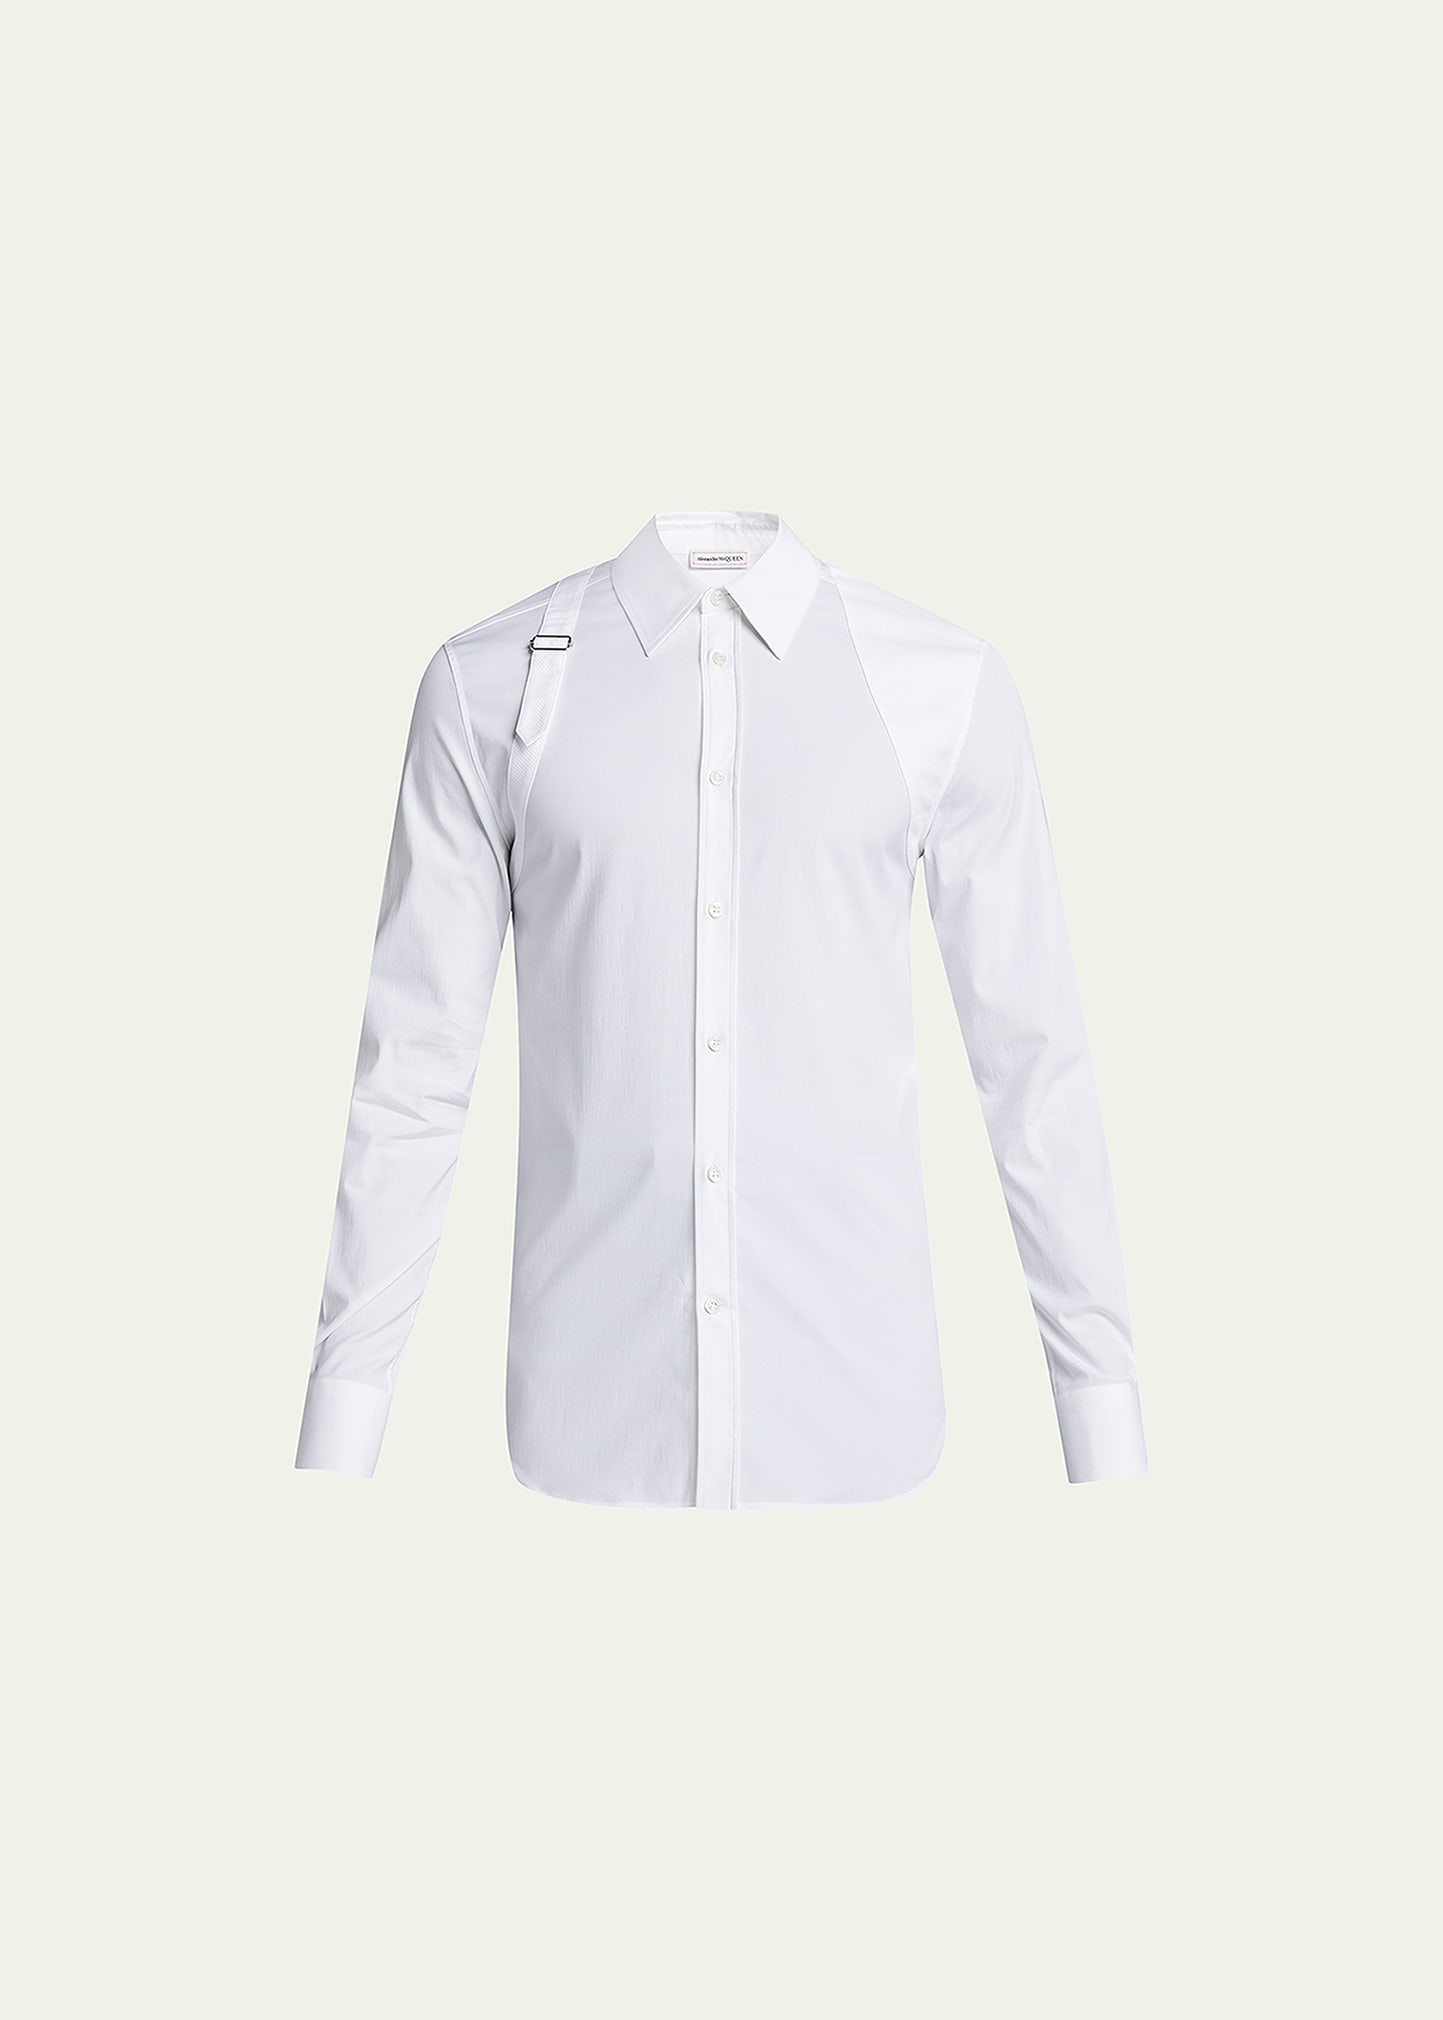 Alexander Mcqueen Men's Harness Sport Shirt W/ Strap In White